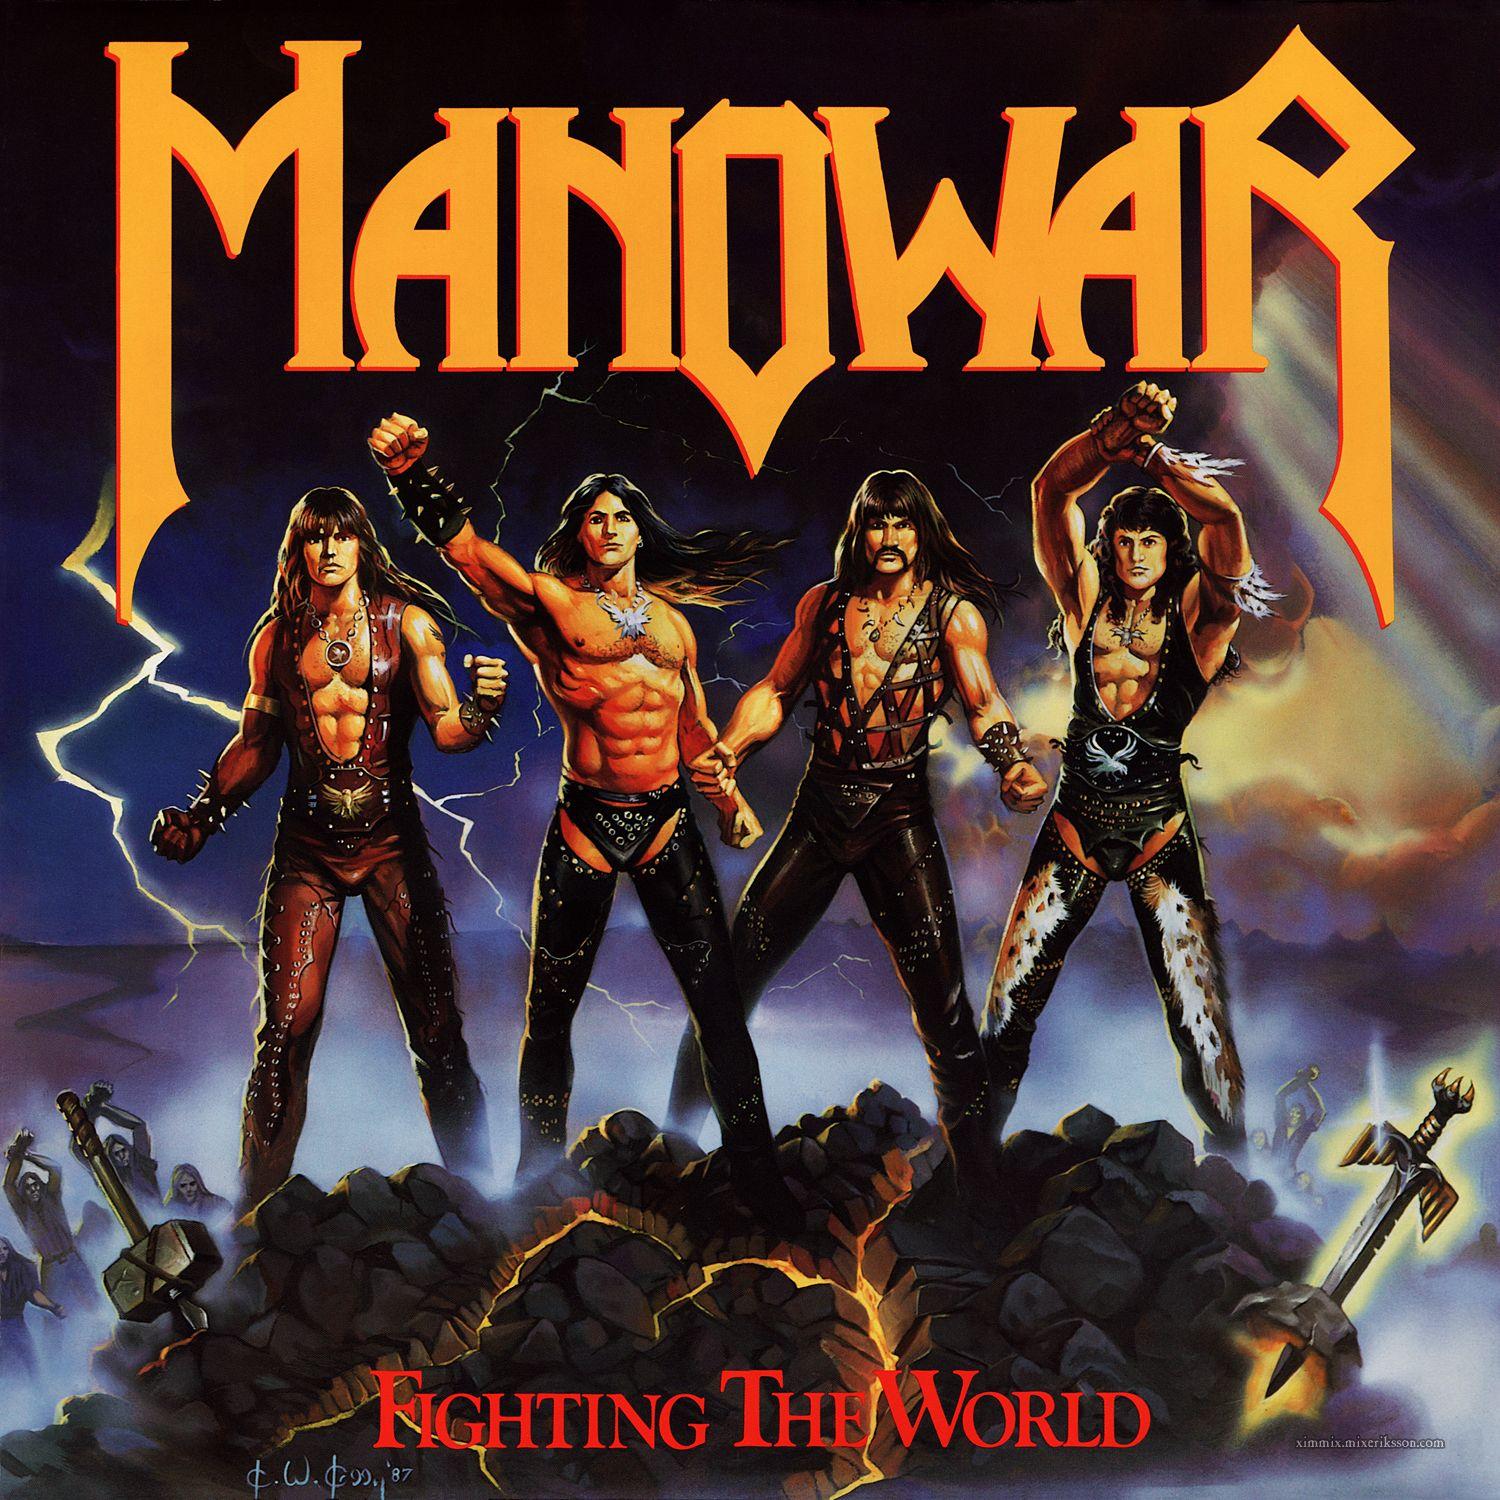 manowar warriors of the world download